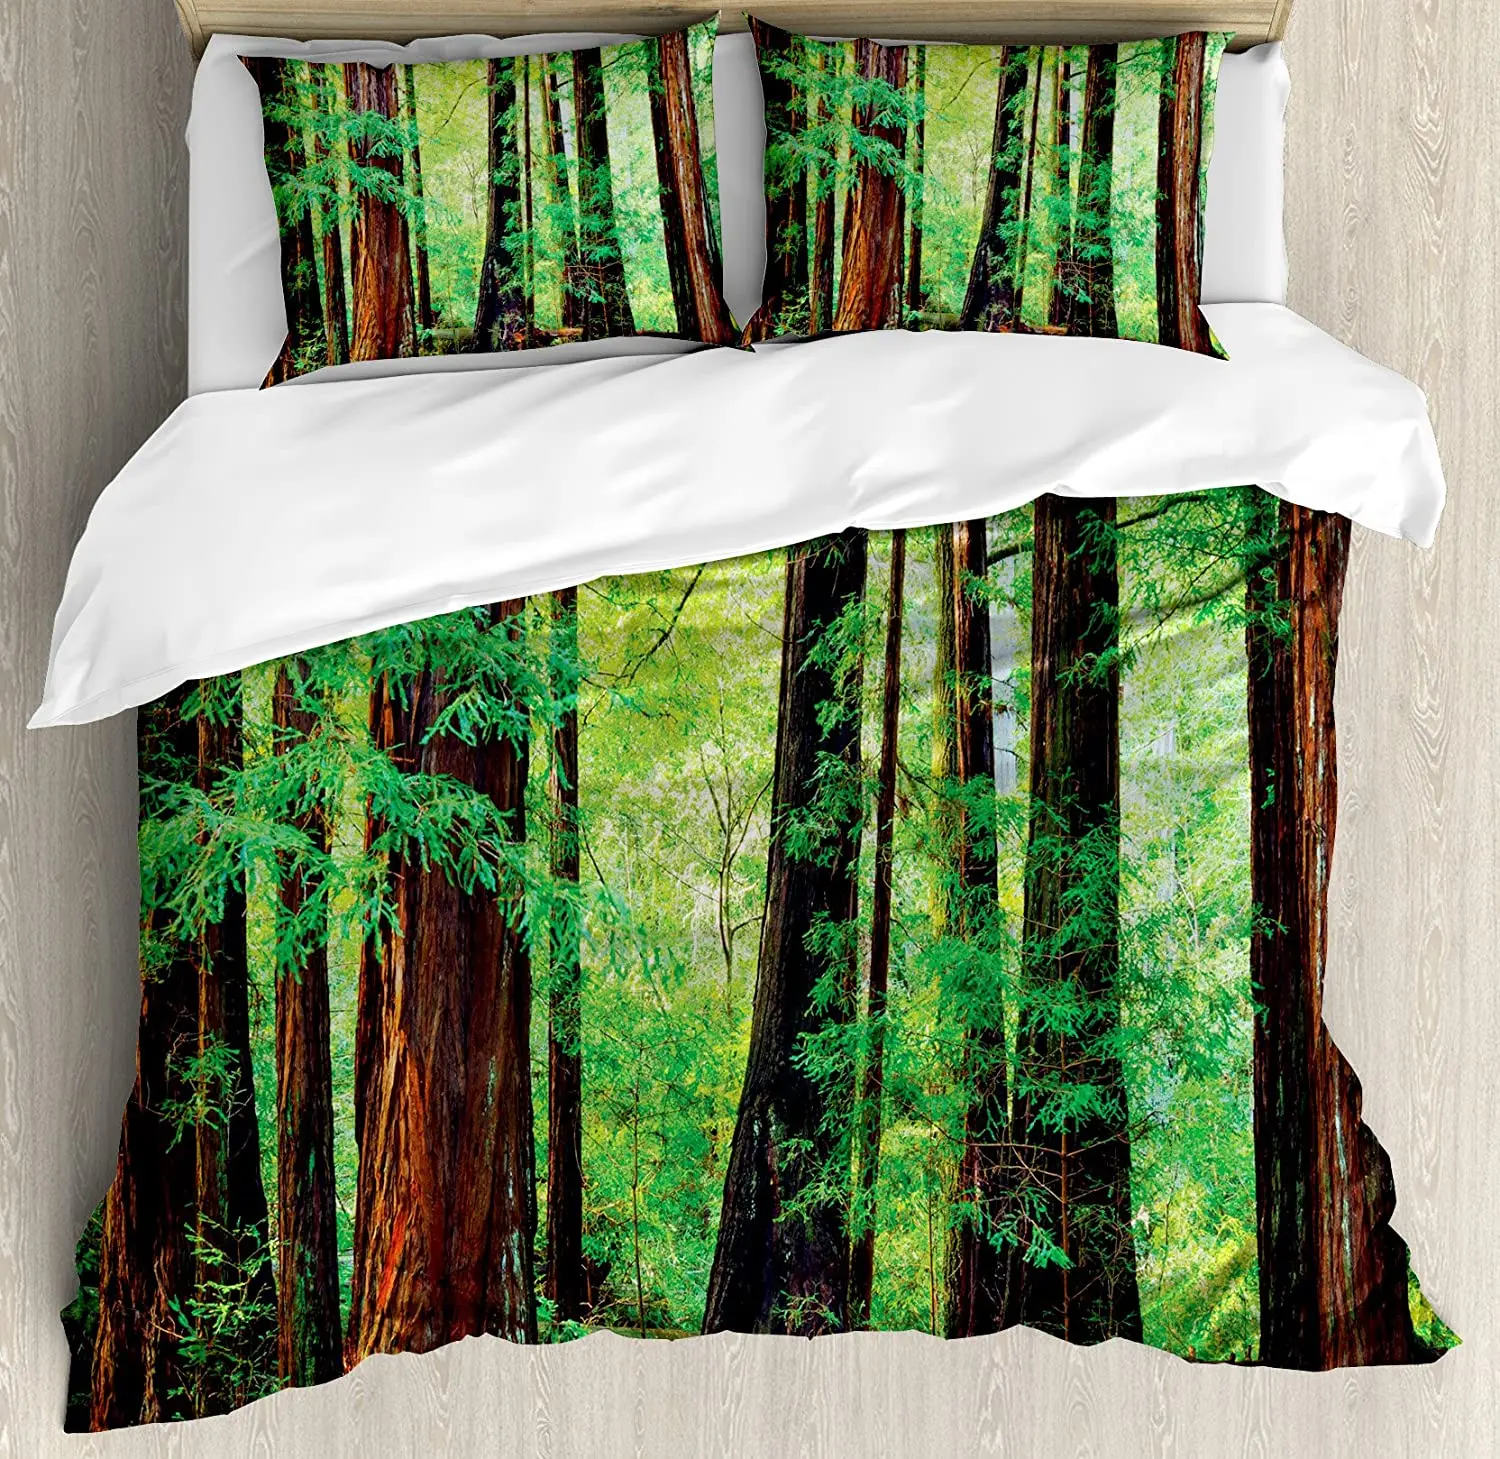 

Woodland Decor Bedding Set For Bedroom Bed Home Redwood Trees Northwest Rain Forest Tropic Duvet Cover Quilt Cover Pillowcase